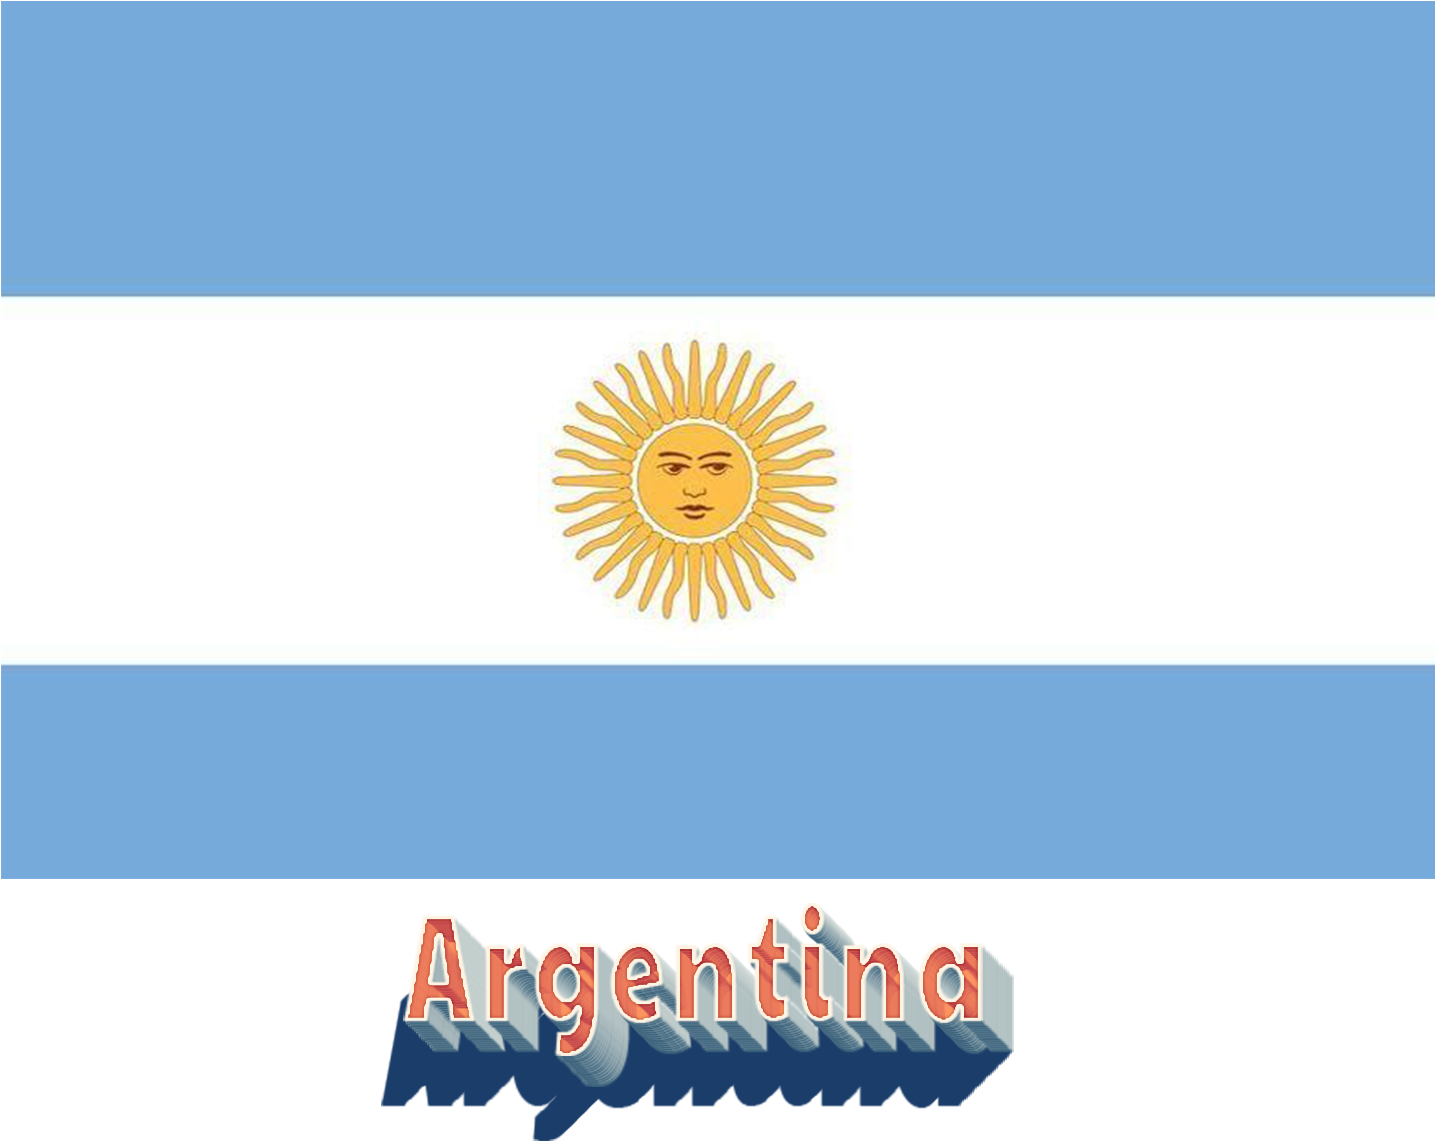 Argentinian Flagand Name Illustration PNG image